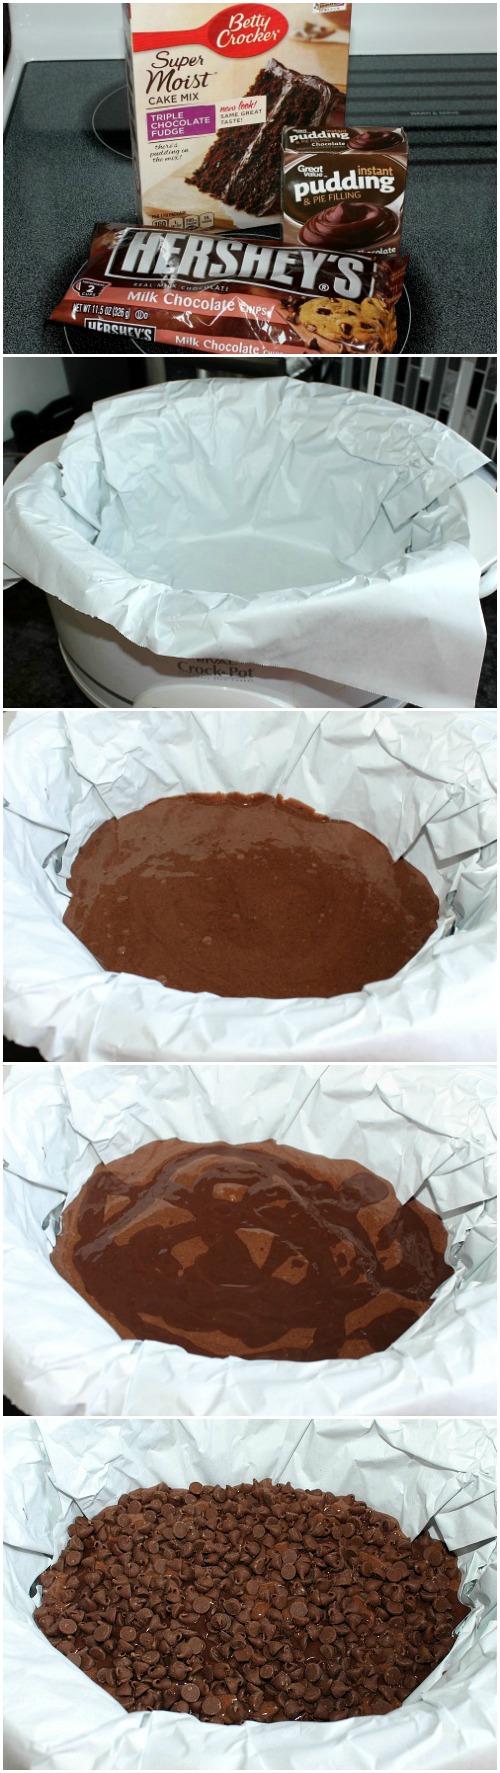 Quick and Easy Crockpot Chocolate Lava Cake / myfindsonline.com